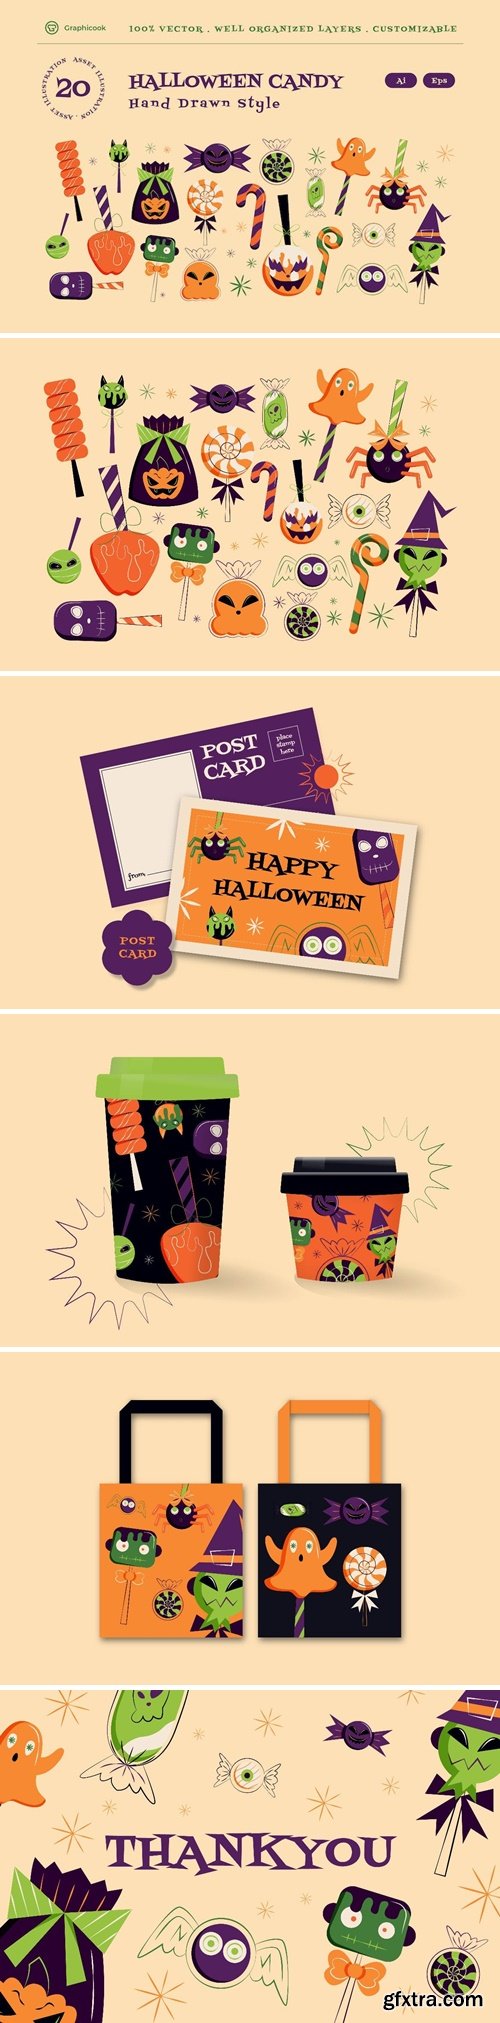 Purple Hand Drawn Halloween Candy Illustration Set 2K4L5DR